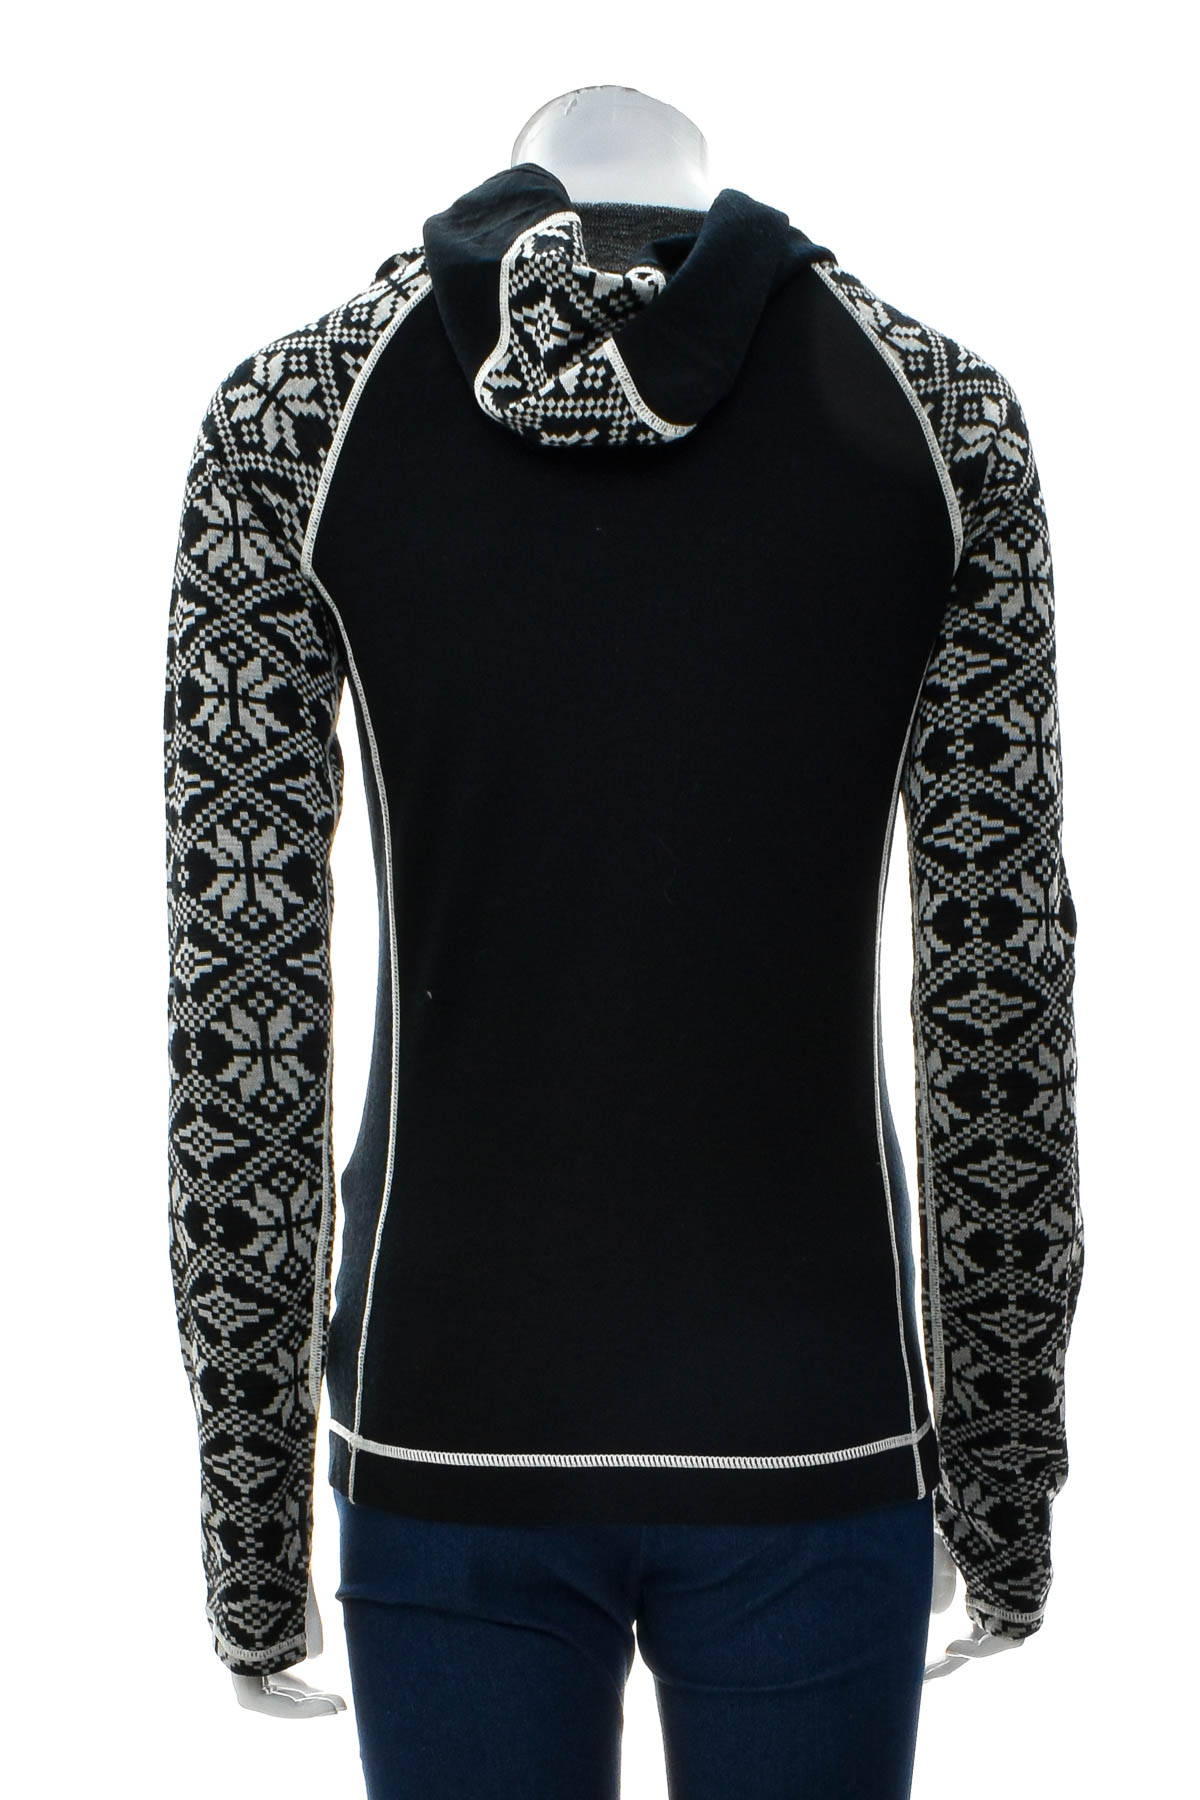 Women's sport blouse - Telluride Clothing Company - 1